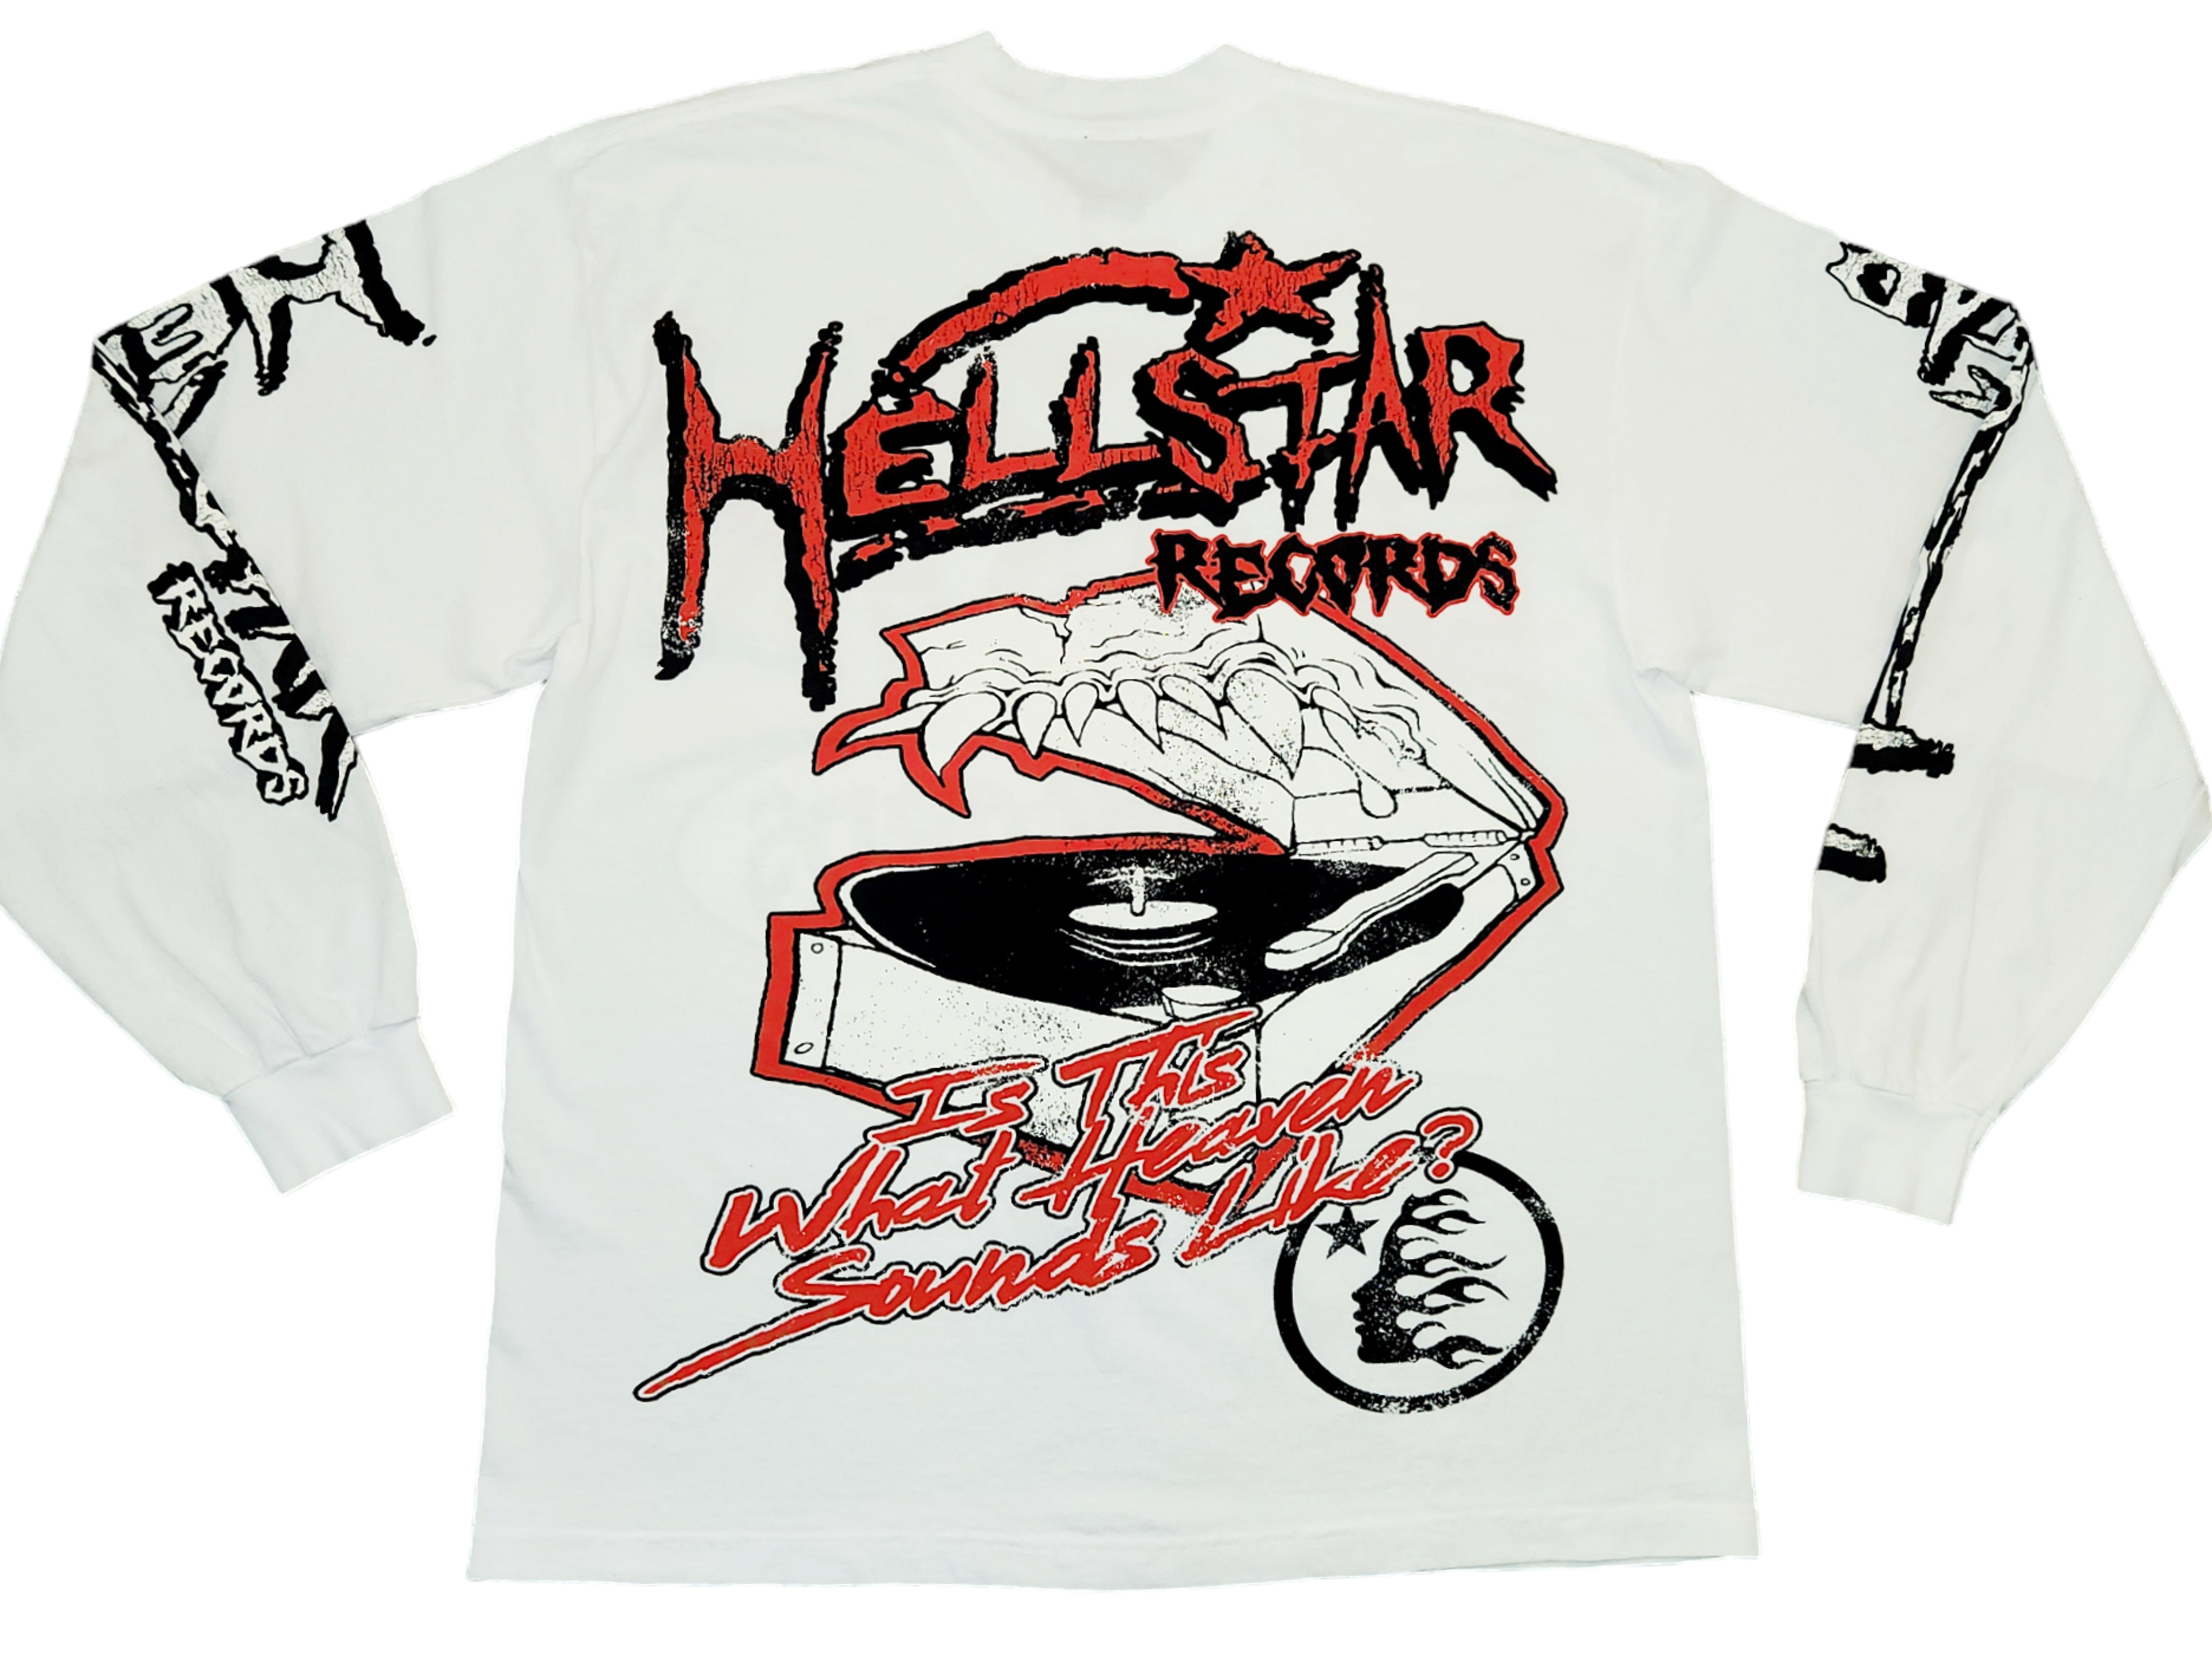 Alternate View 1 of Hellstar "Records" L/S Shirt